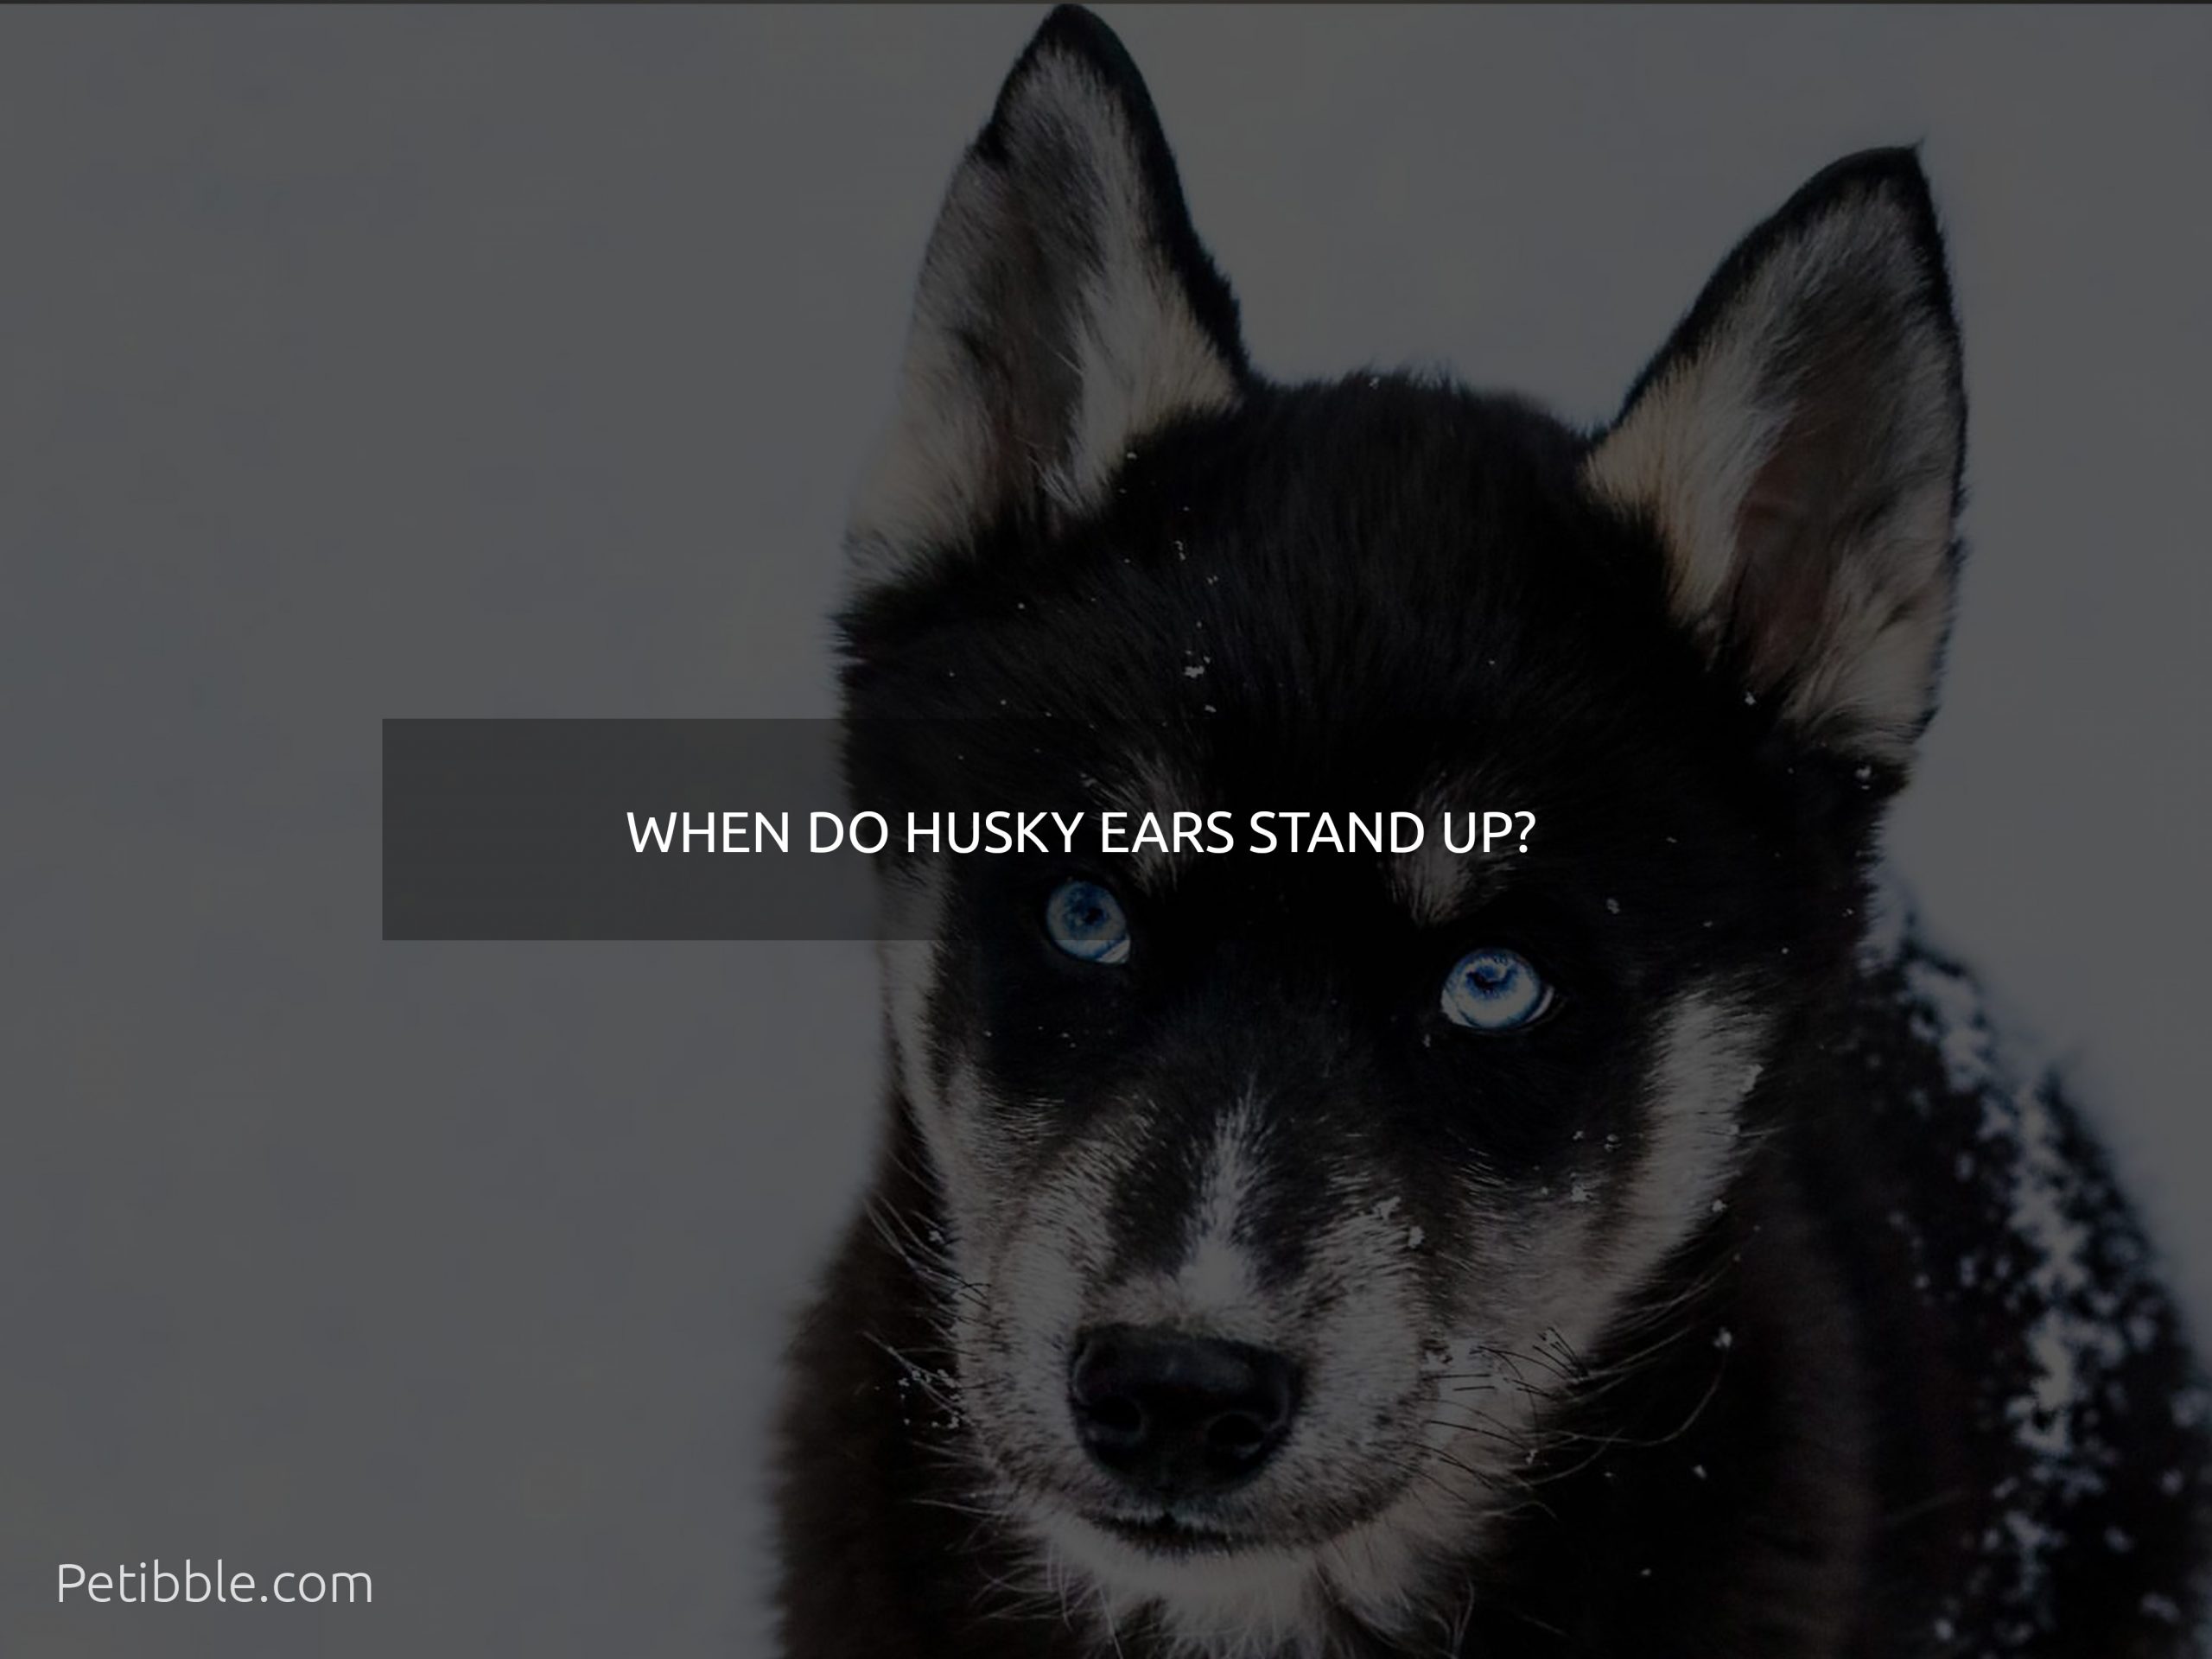 When do Husky ears stand up?